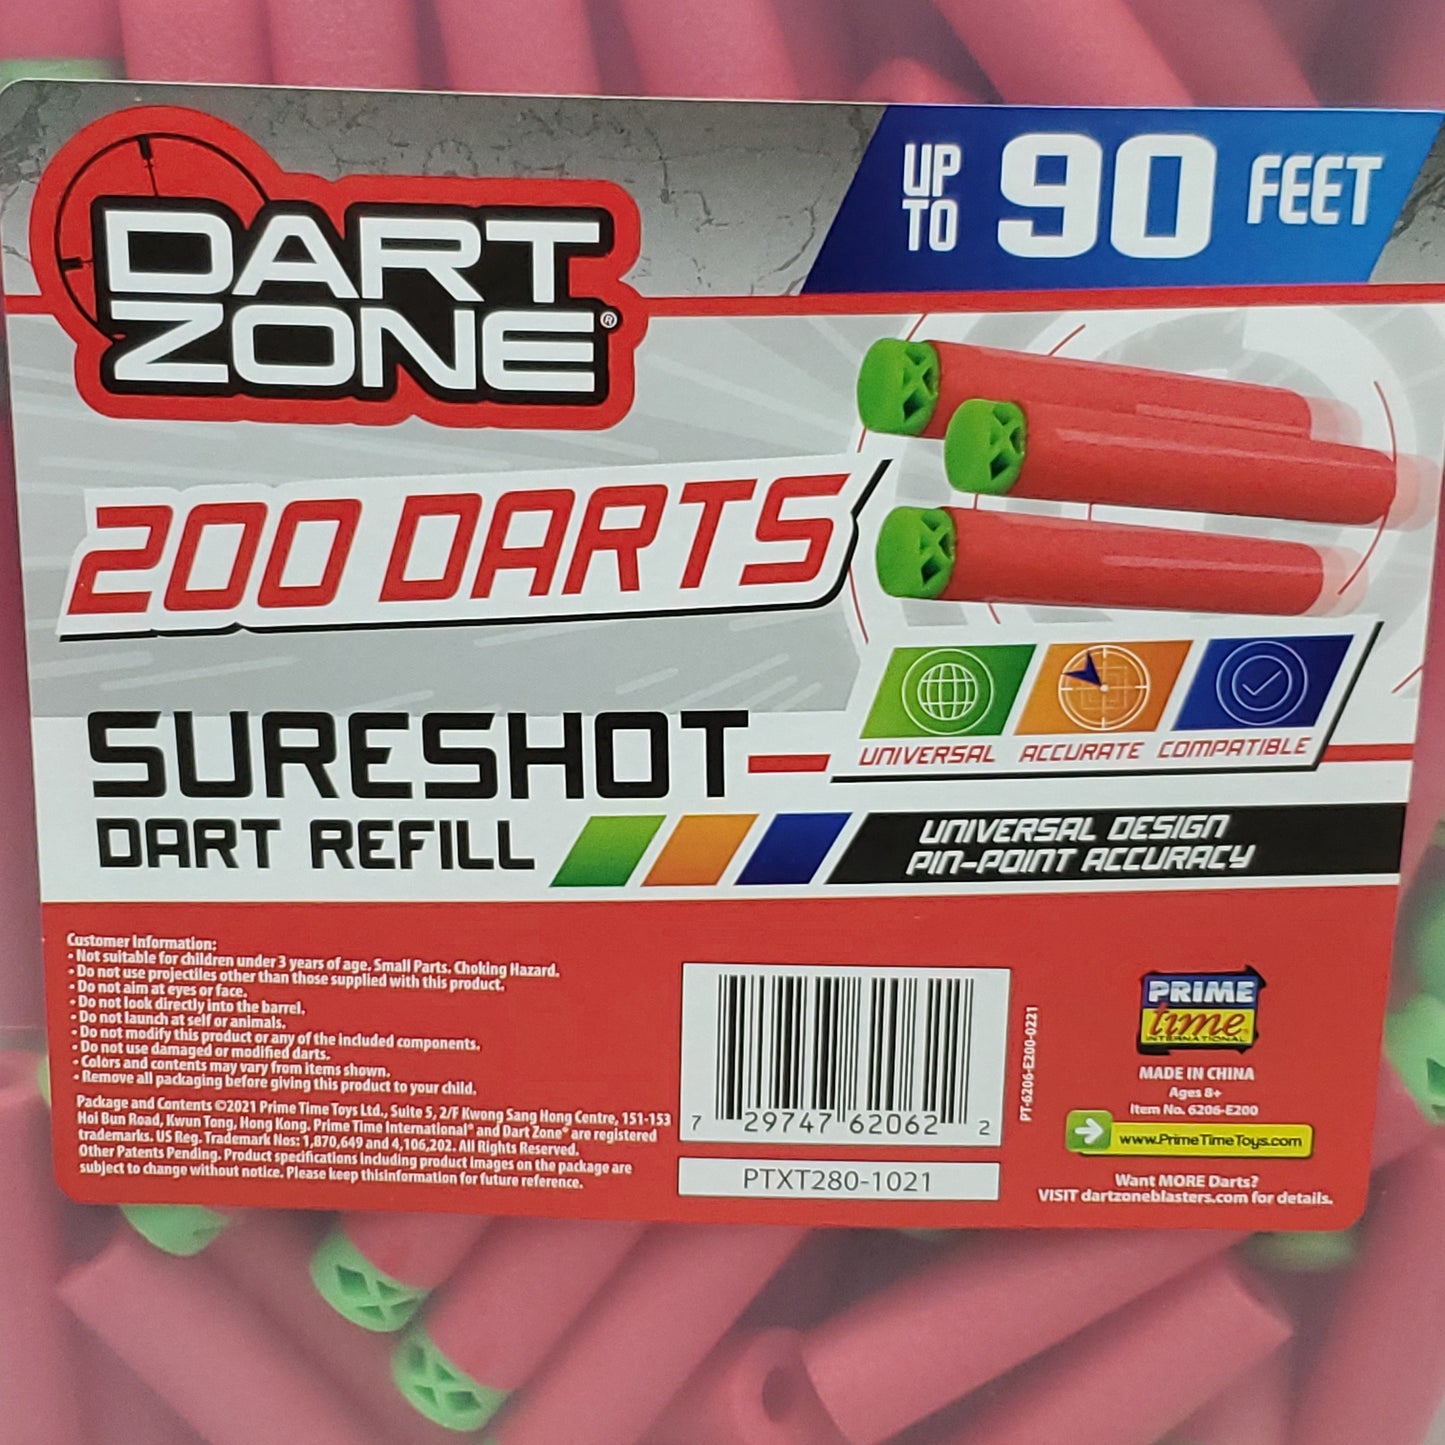 PRIME TIME DART ZONE SureShot Dart Refill 800 Darts PTXT280-1021 (New)